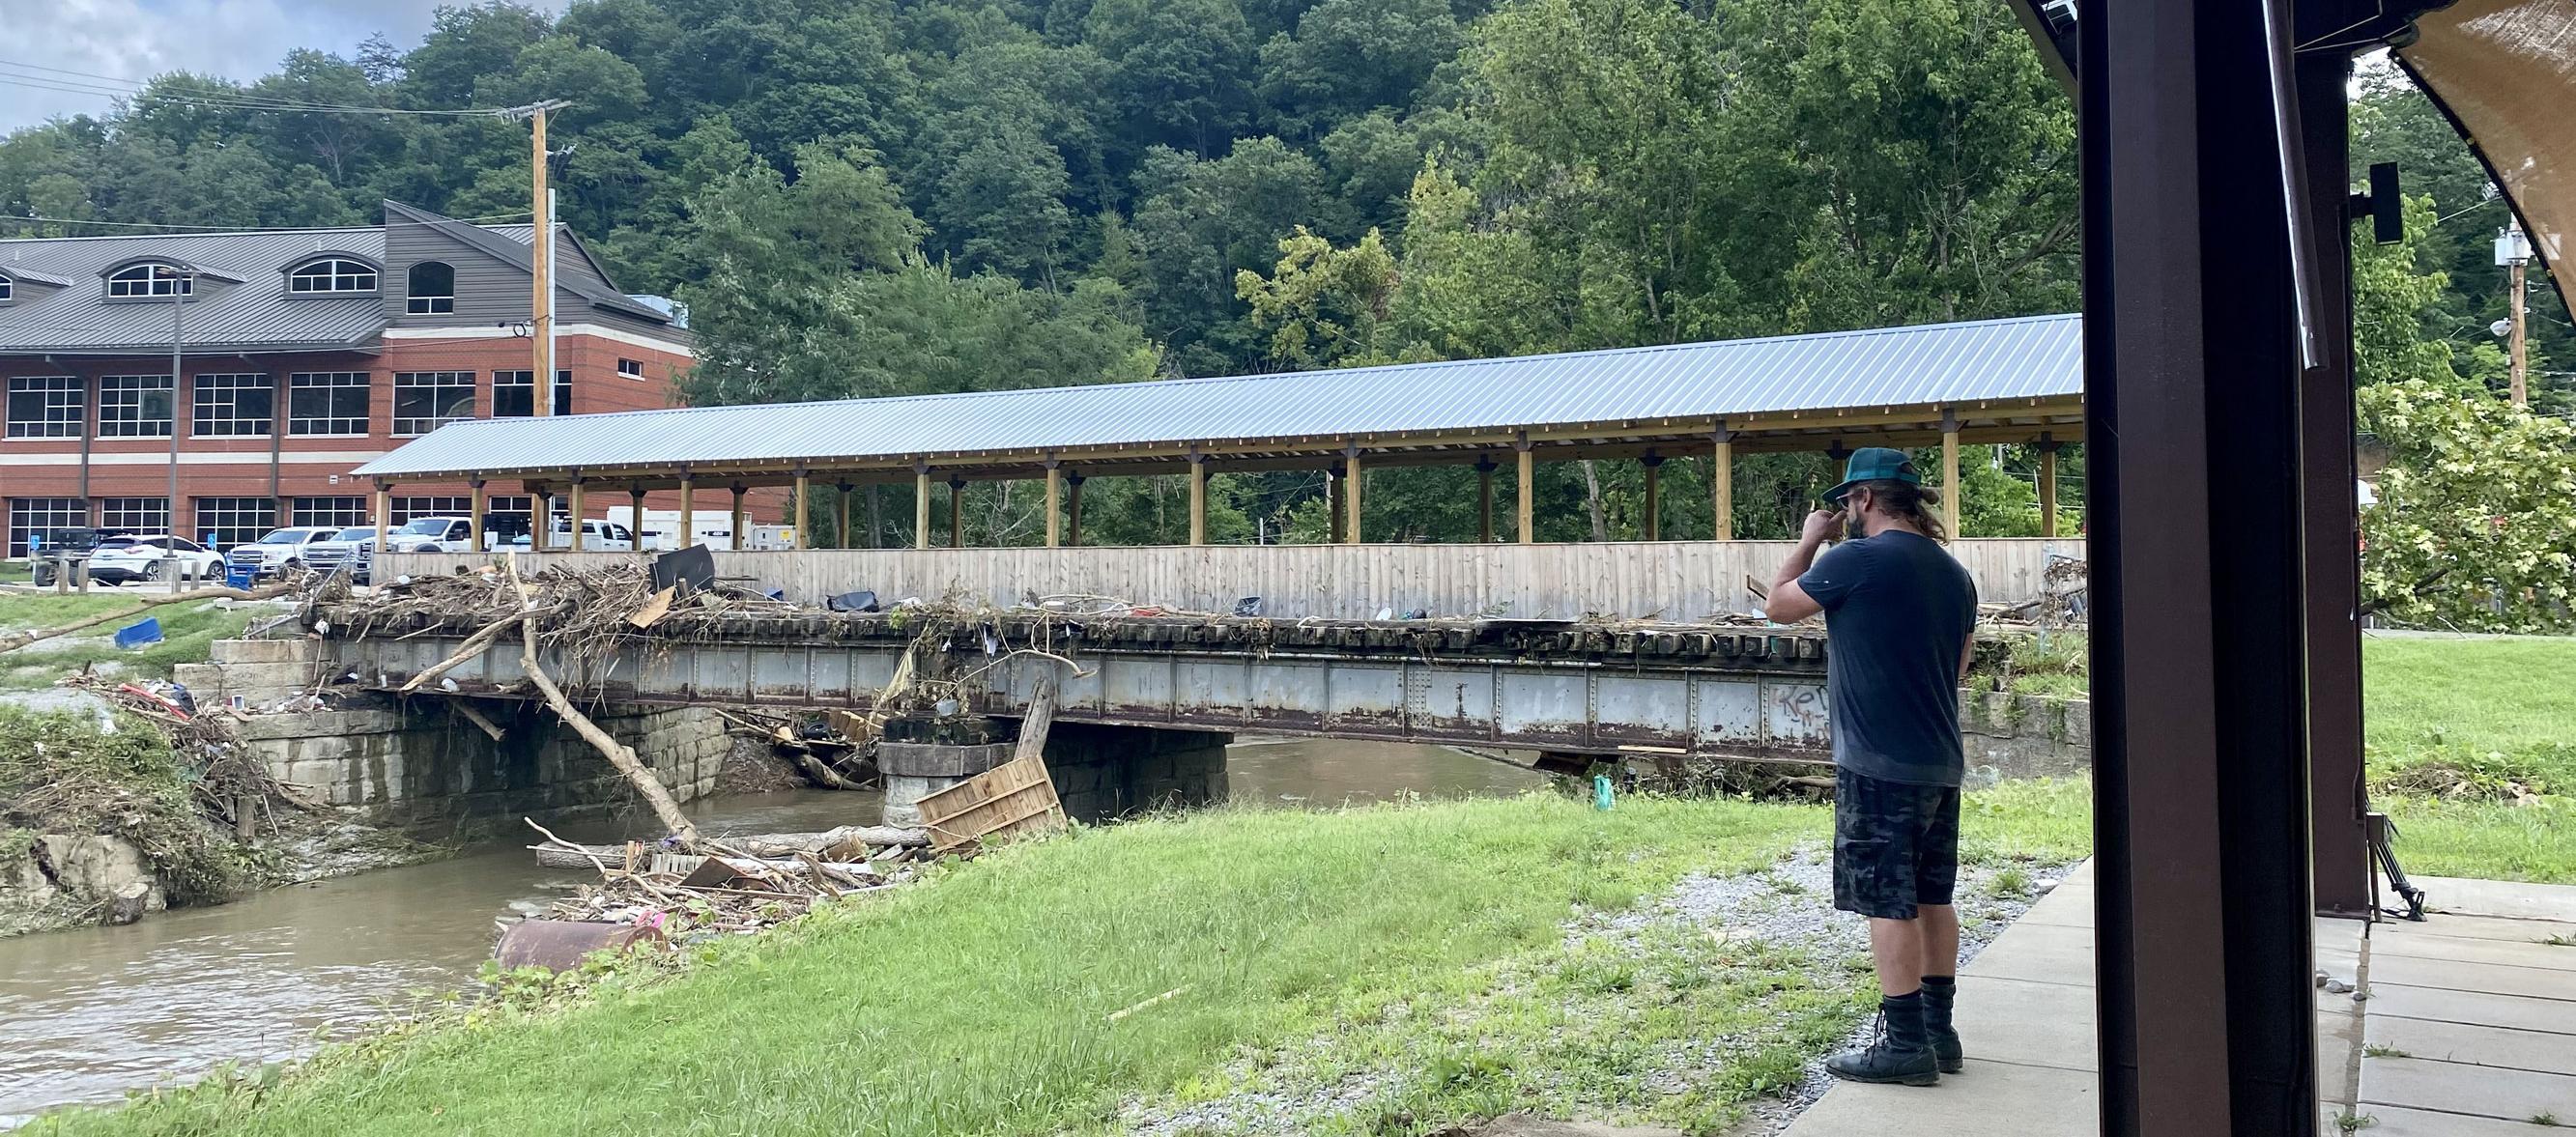 Man wearing black observes debris in river pushing against a covered bridge